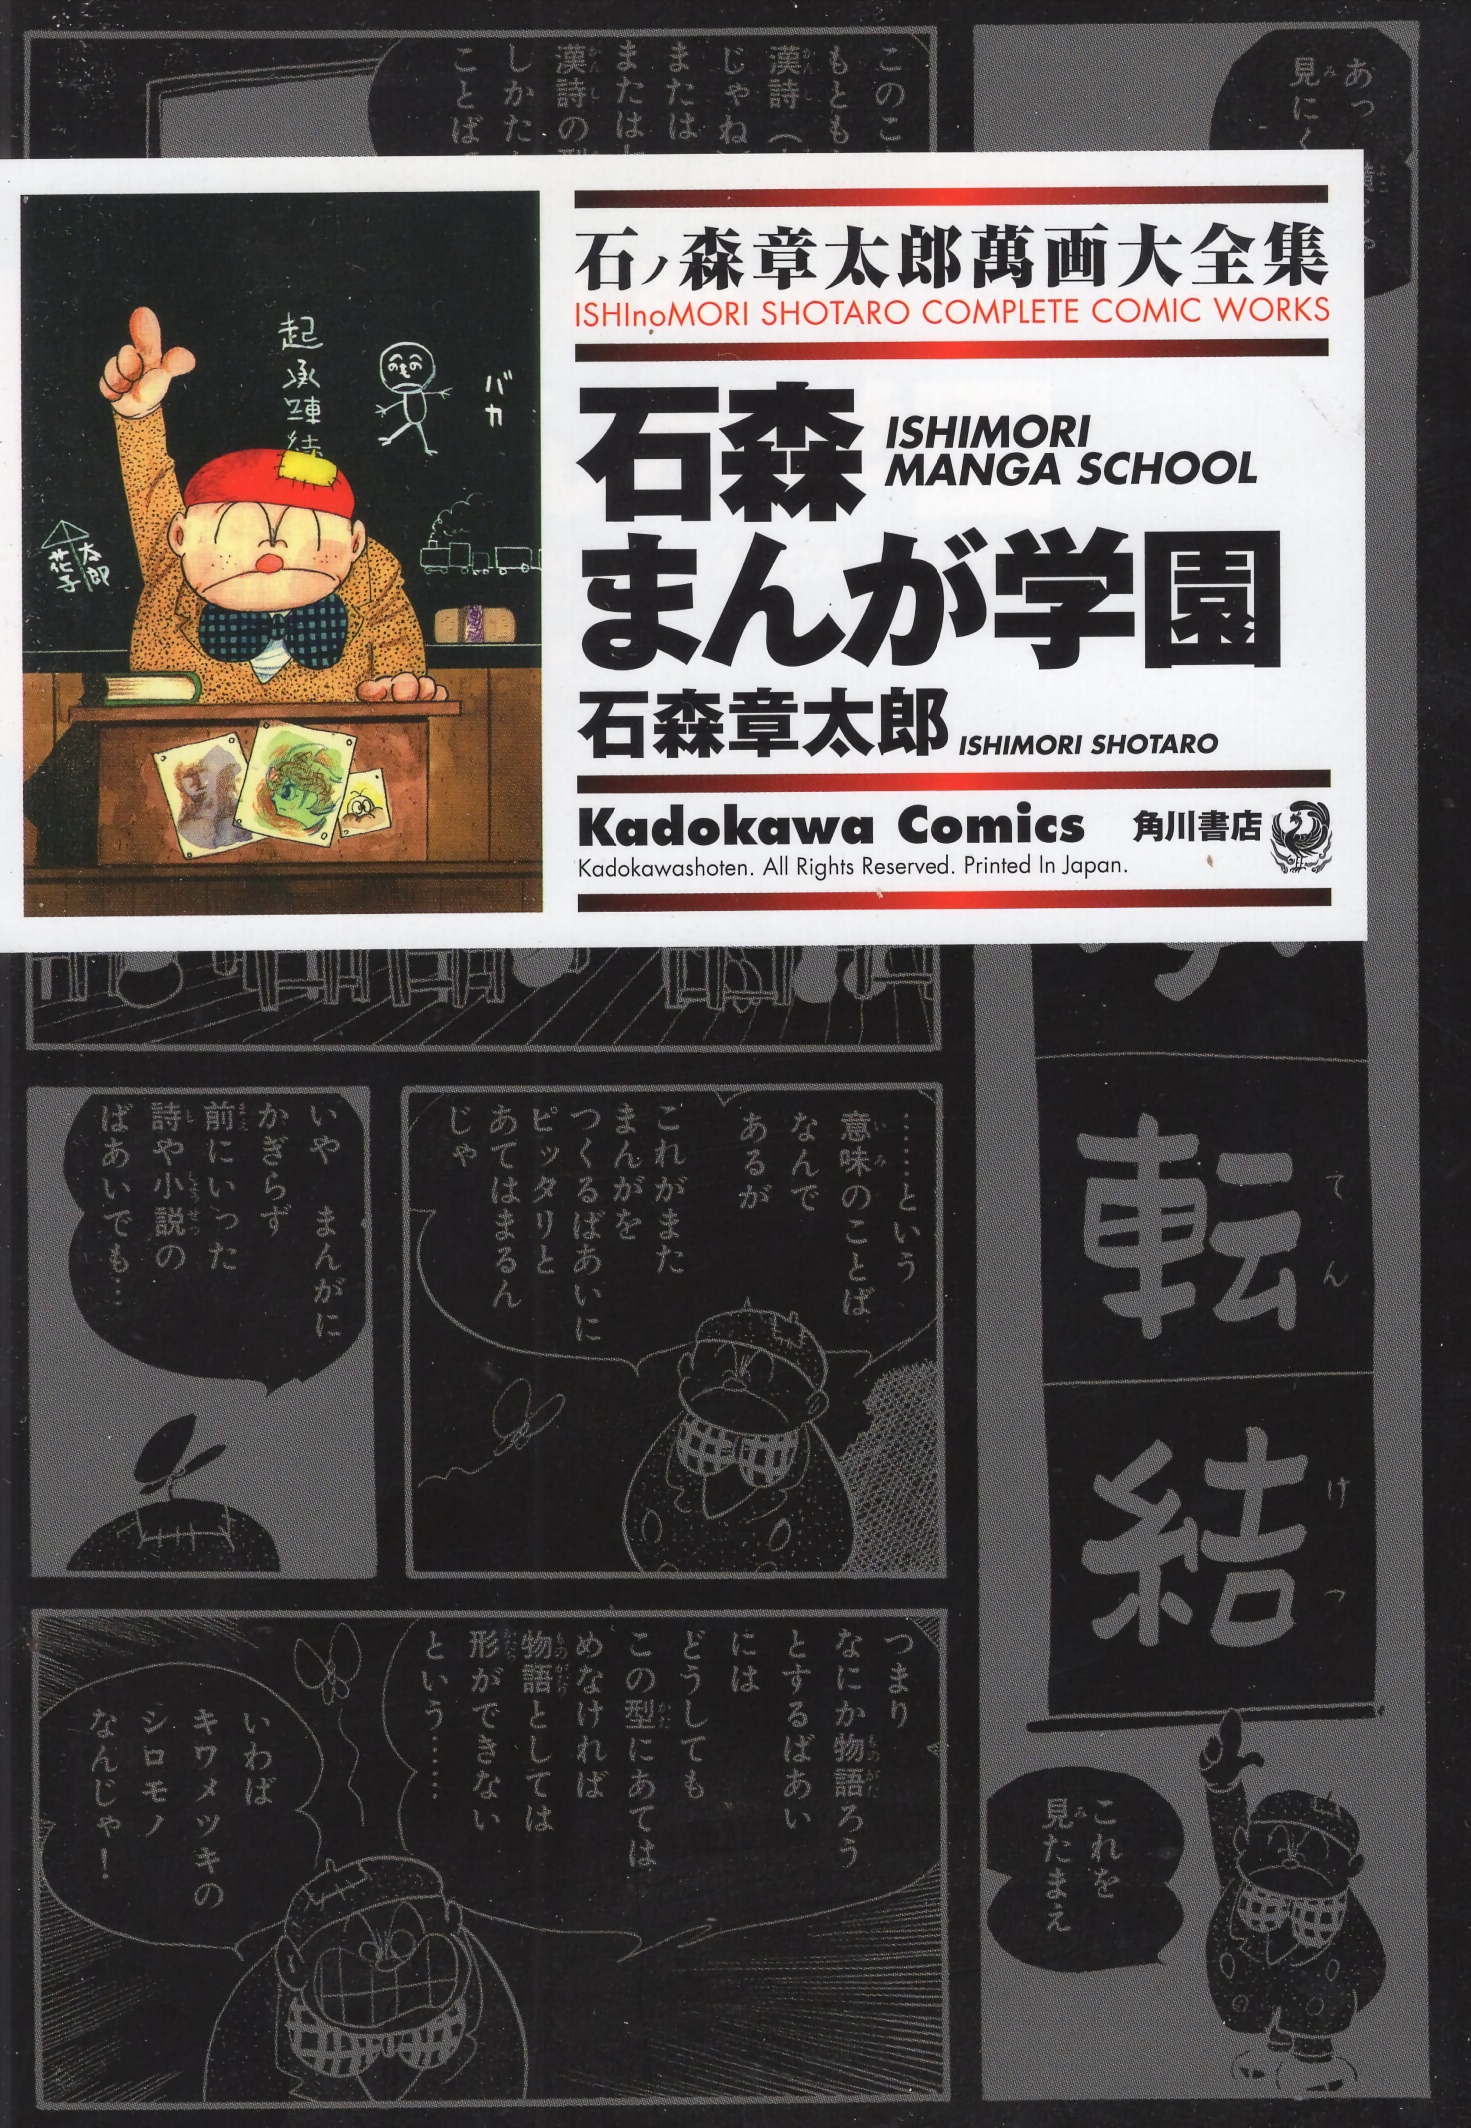 Ishimori Manga Academy cover 1